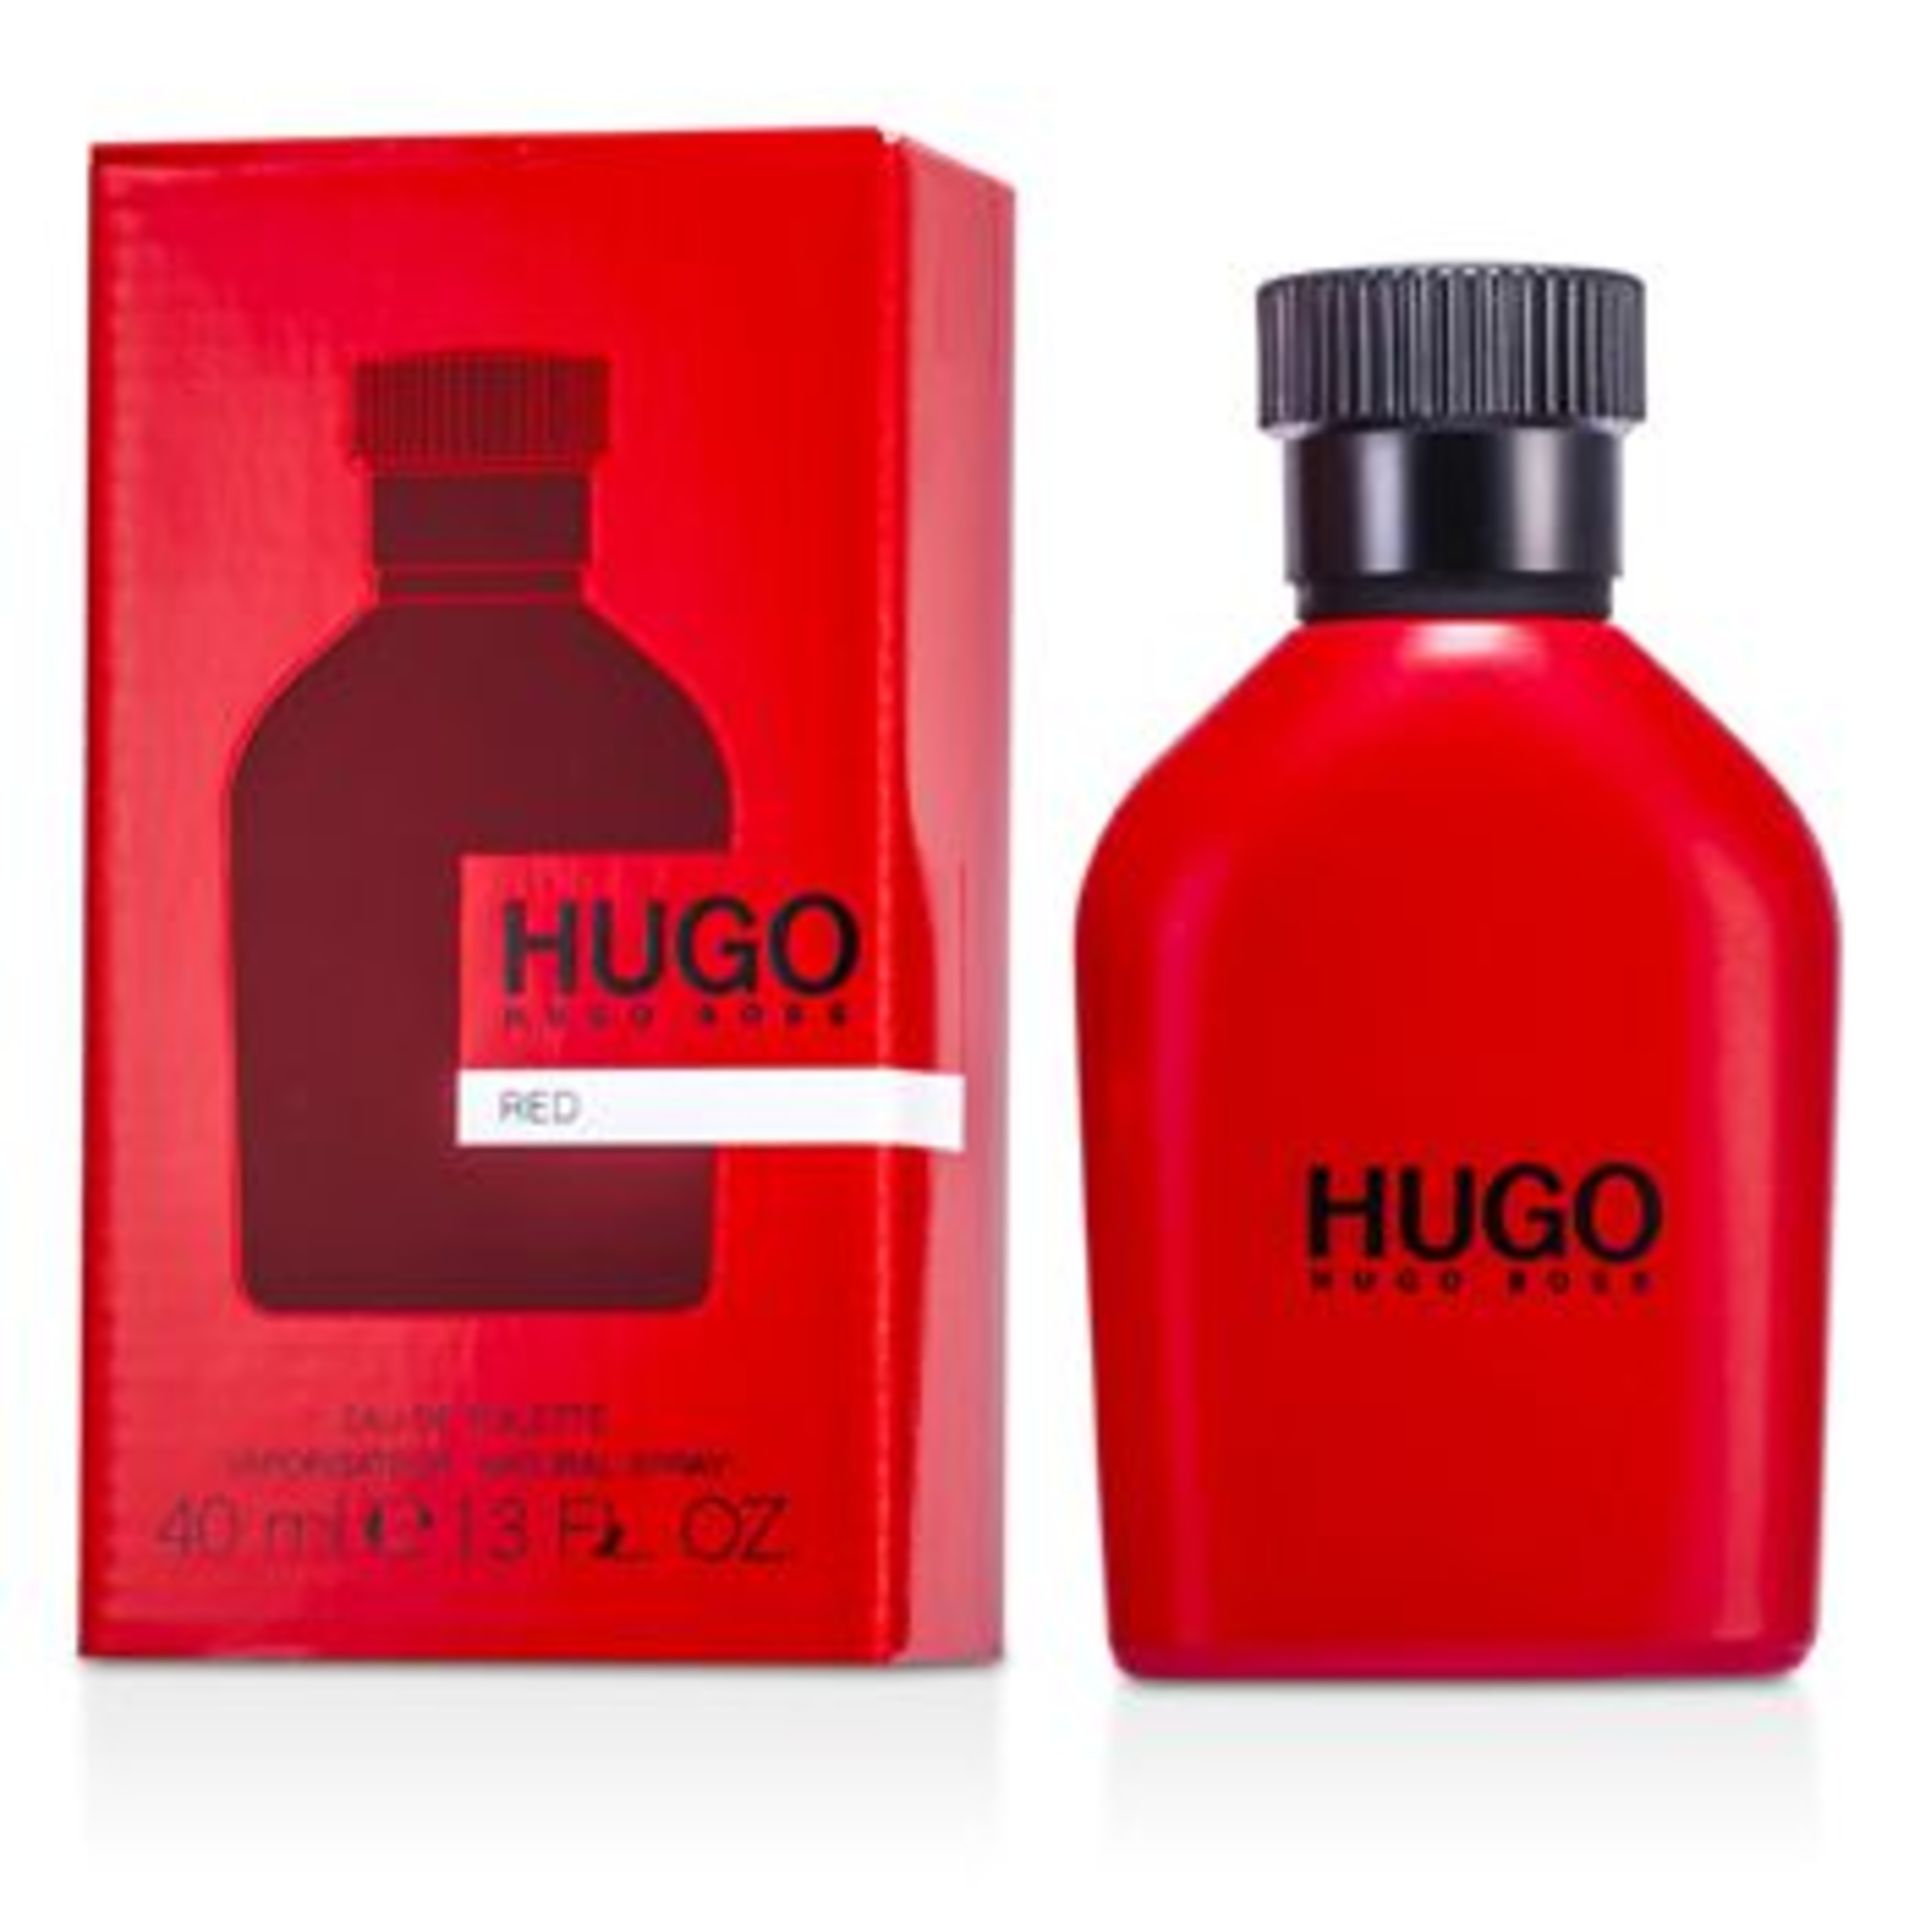 V Brand New Hugo Boss Red EDT Spray 40ml Superdrug £34.00 X 2 YOUR BID PRICE TO BE MULTIPLIED BY